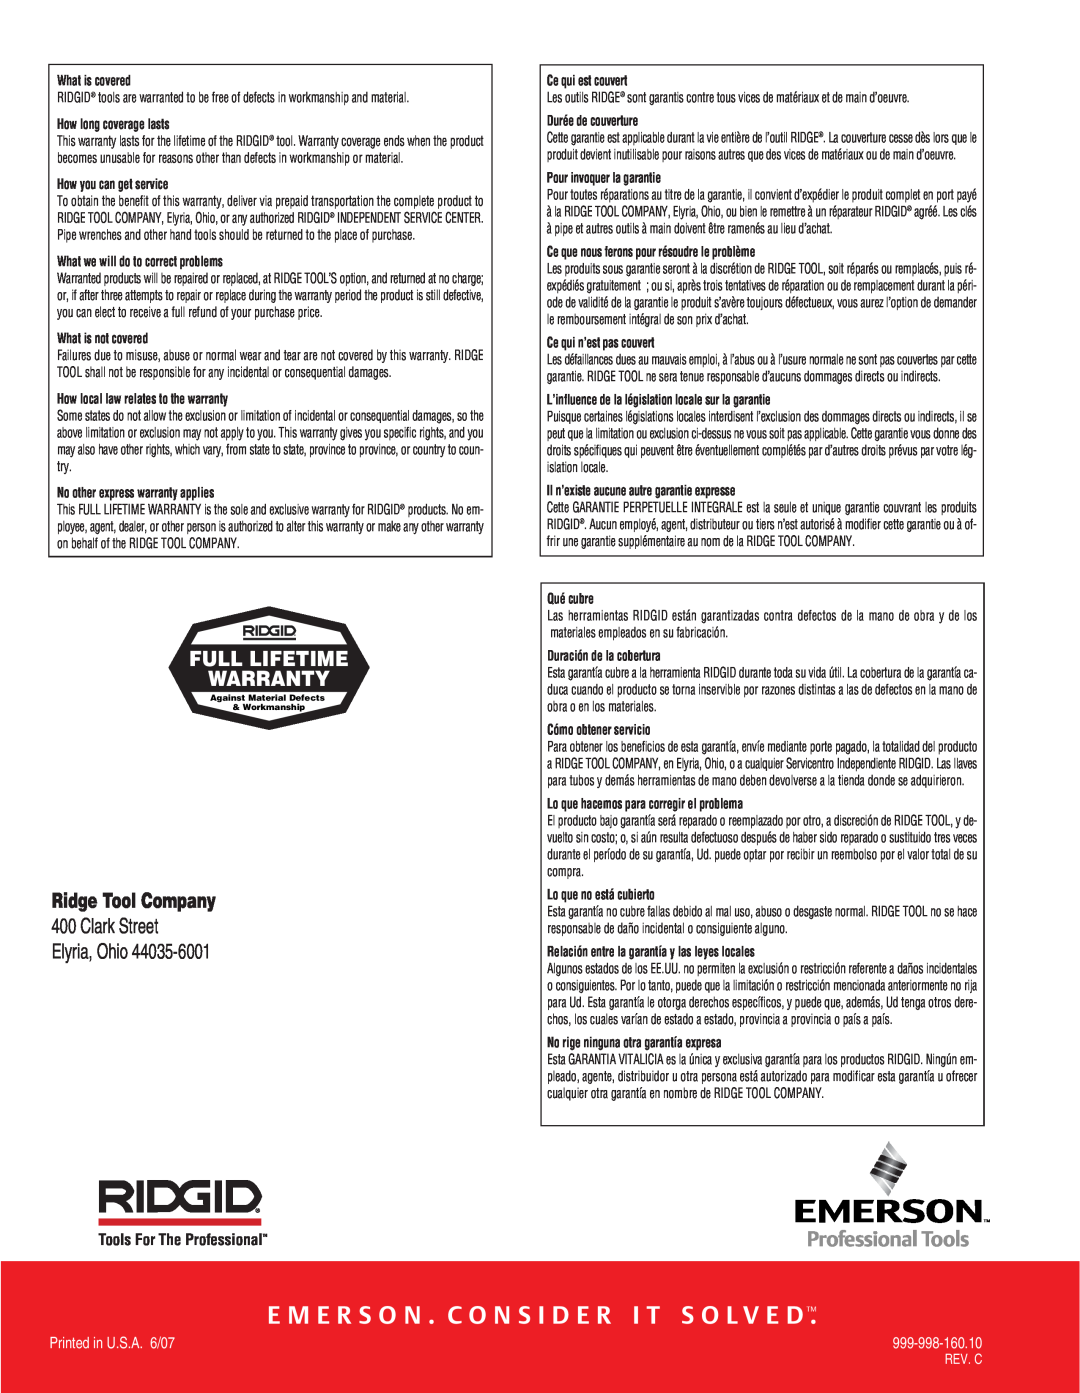 RIDGID Metal Detector E M E R S O N . C O N S I D E R I T S O L V E D, Full Lifetime Warranty, Ridge Tool Company, Rev. C 